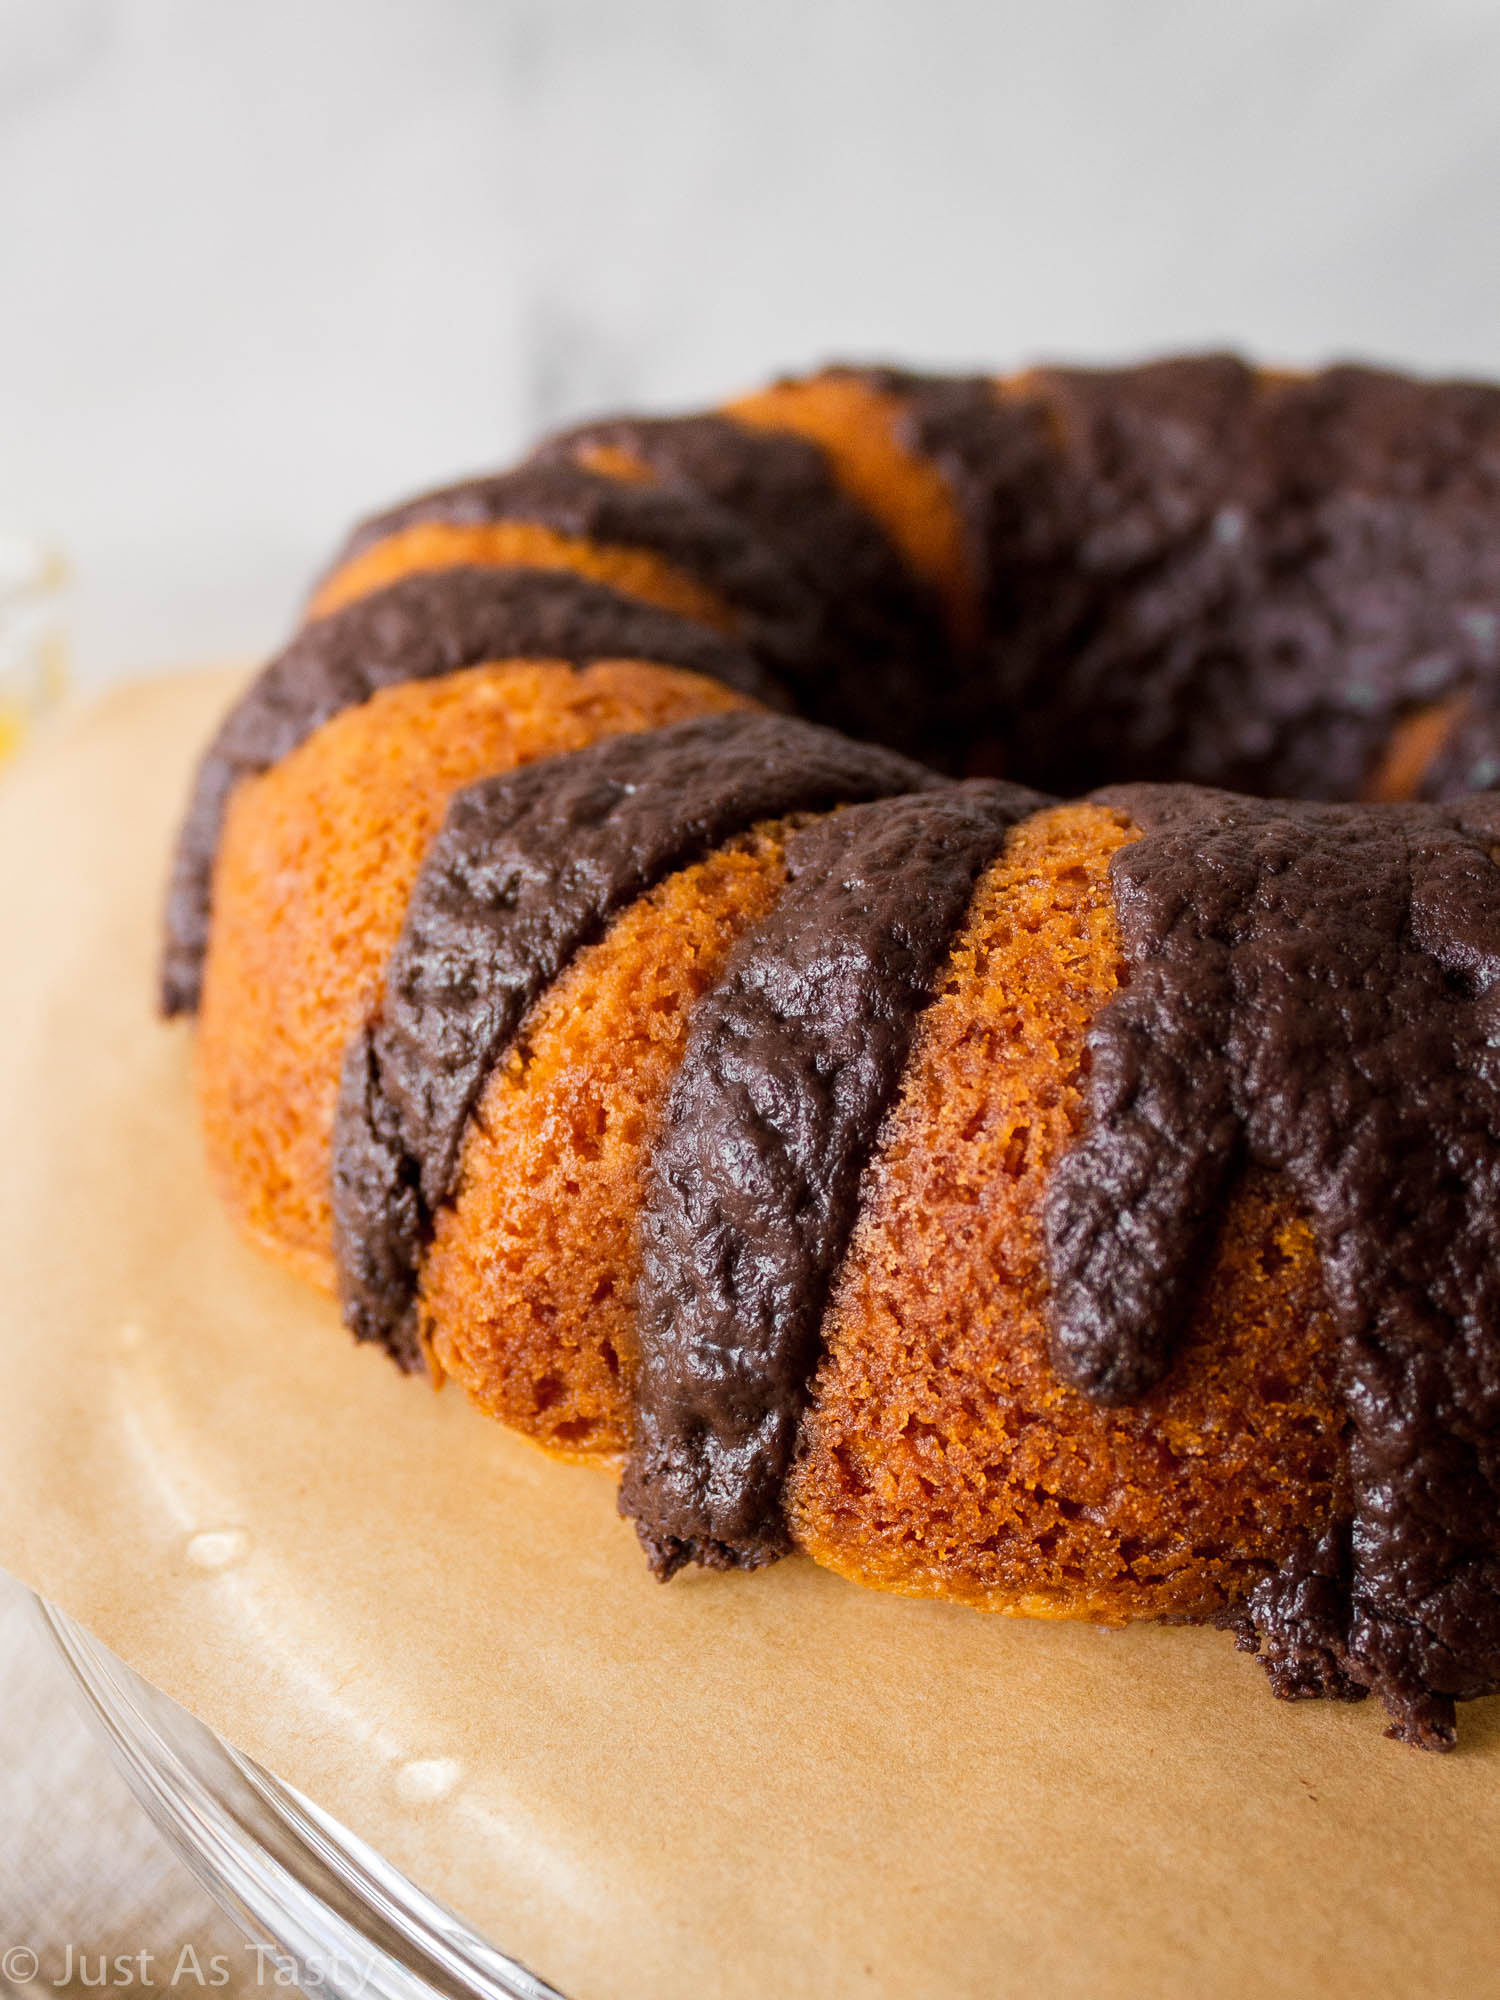 Close-up of orange bundt cake with chocolate glaze.